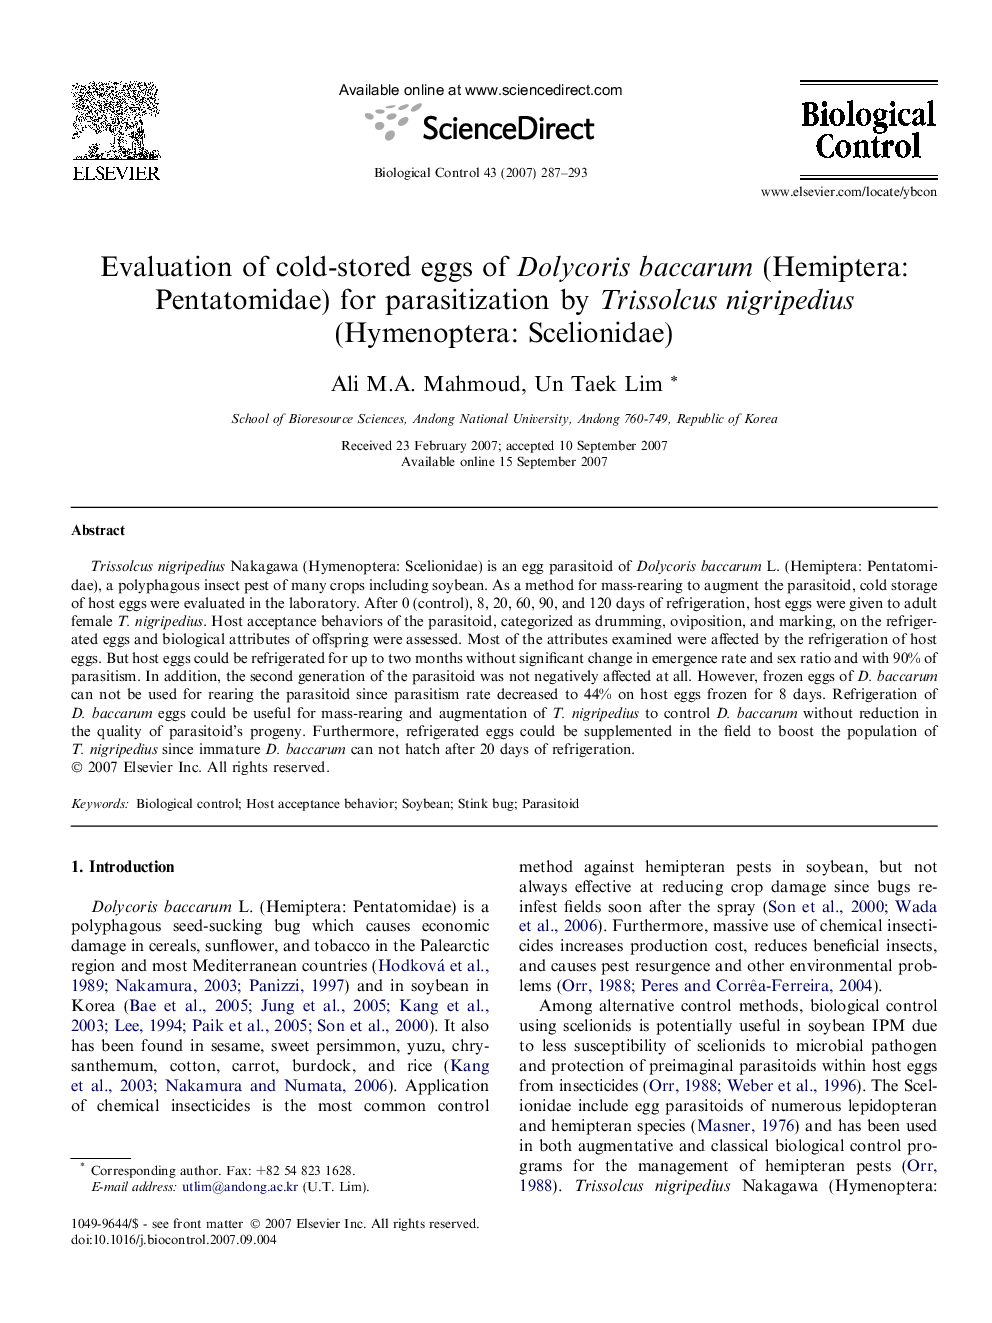 Evaluation of cold-stored eggs of Dolycoris baccarum (Hemiptera: Pentatomidae) for parasitization by Trissolcus nigripedius (Hymenoptera: Scelionidae)